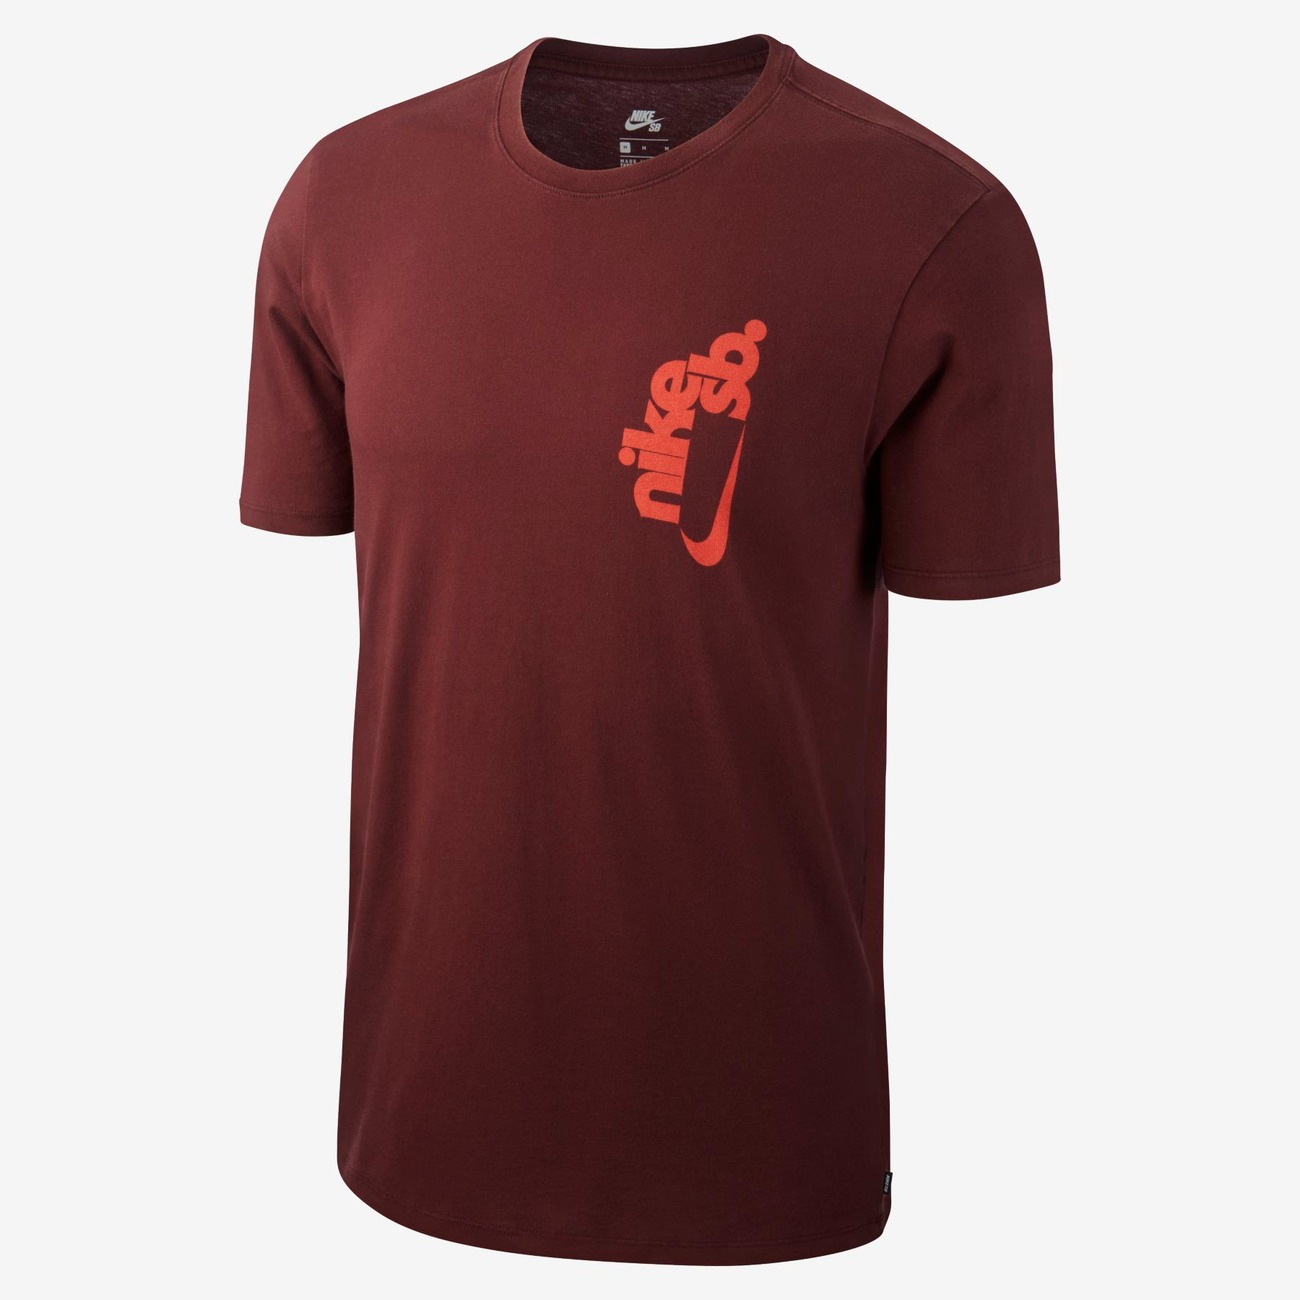 Camiseta Nike SB Masculina - Foto 1